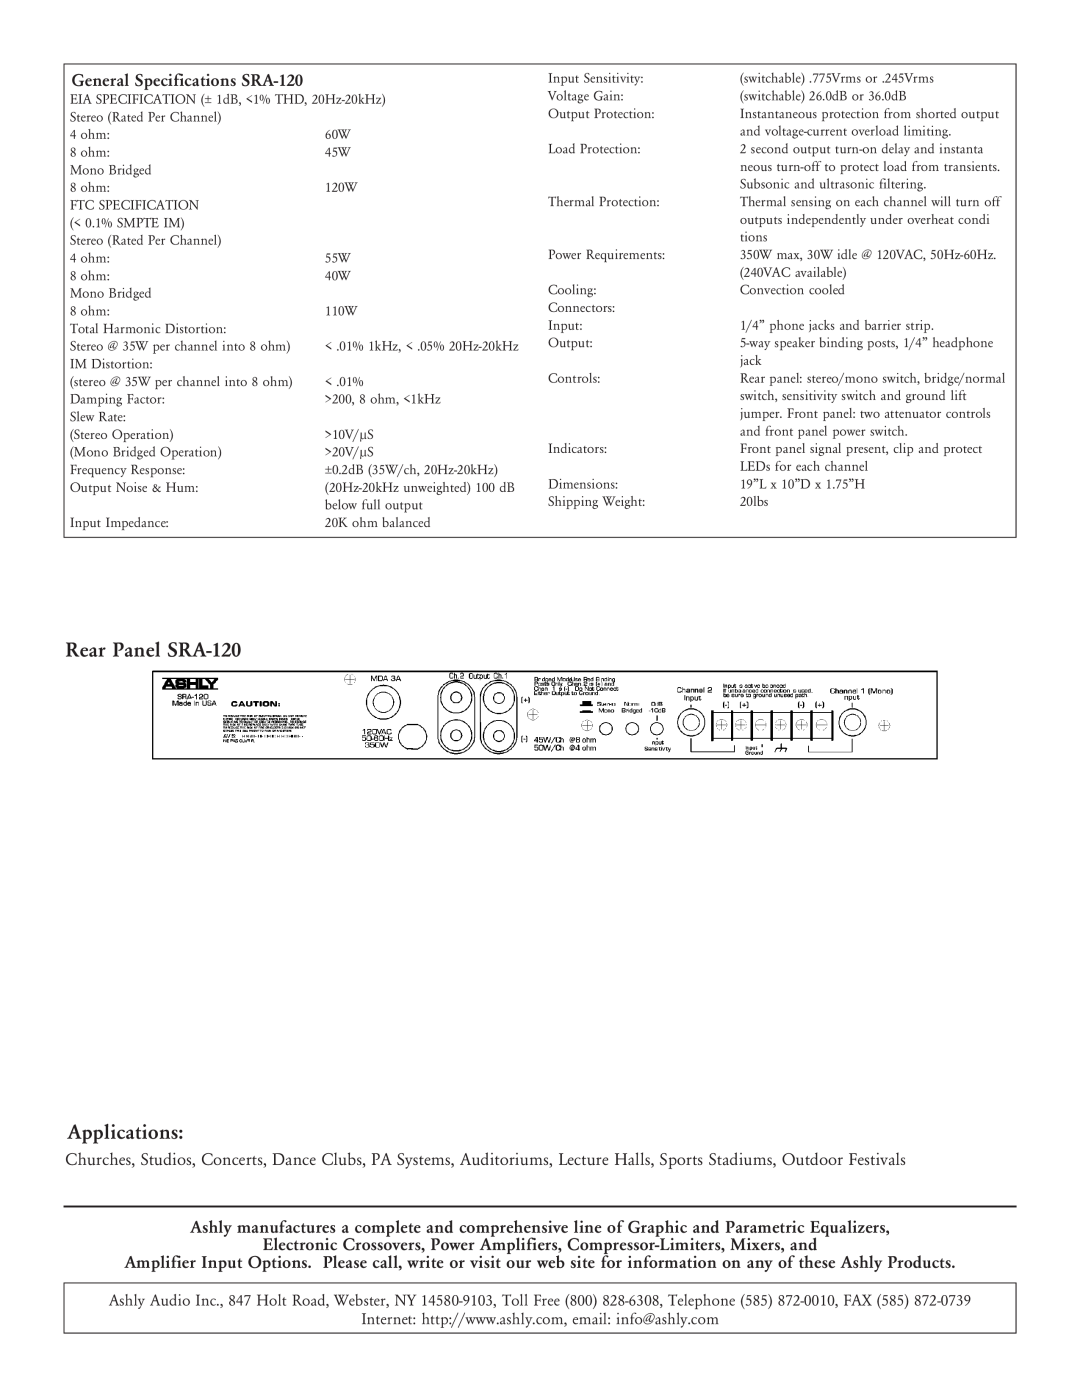 Ashly specifications Rear Panel SRA-120 Applications 